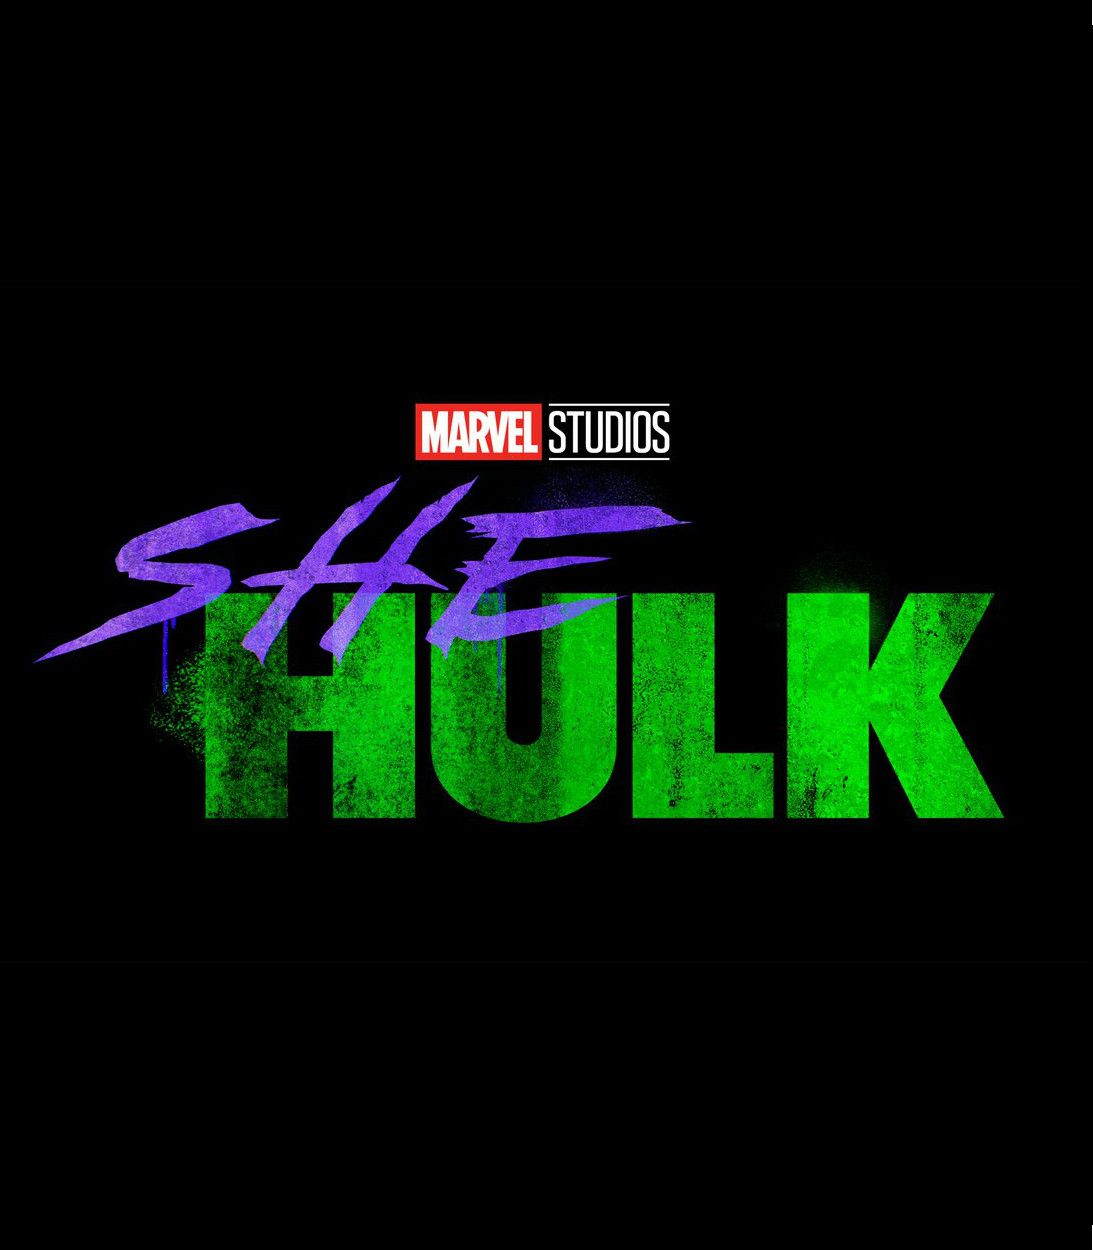 Marvel Studios She-Hulk Disney Plus Series Logo Vertical